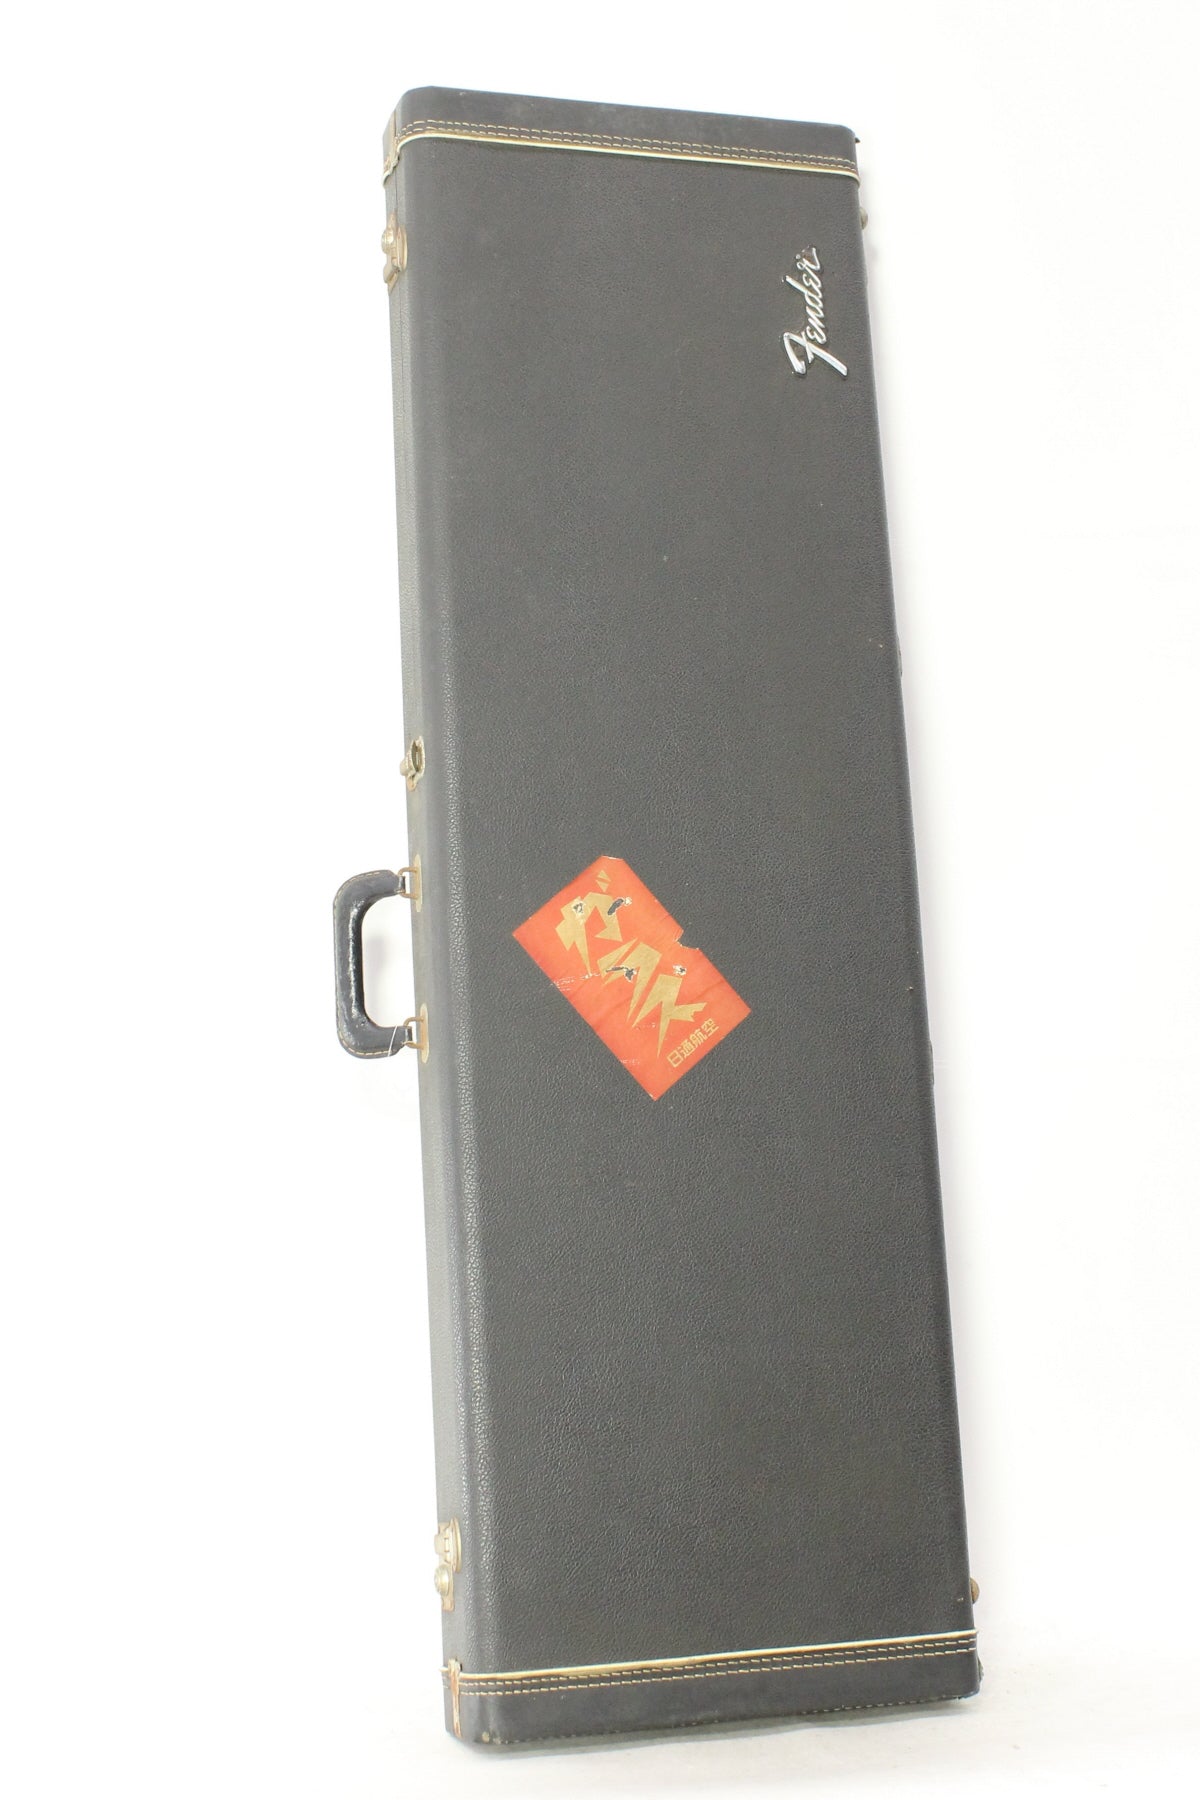 [SN 7650951] USED Fender USA / 1976 Precision Bass Blond/M [1976/4.96kg/Vintage] Fender Precision Bass [08]